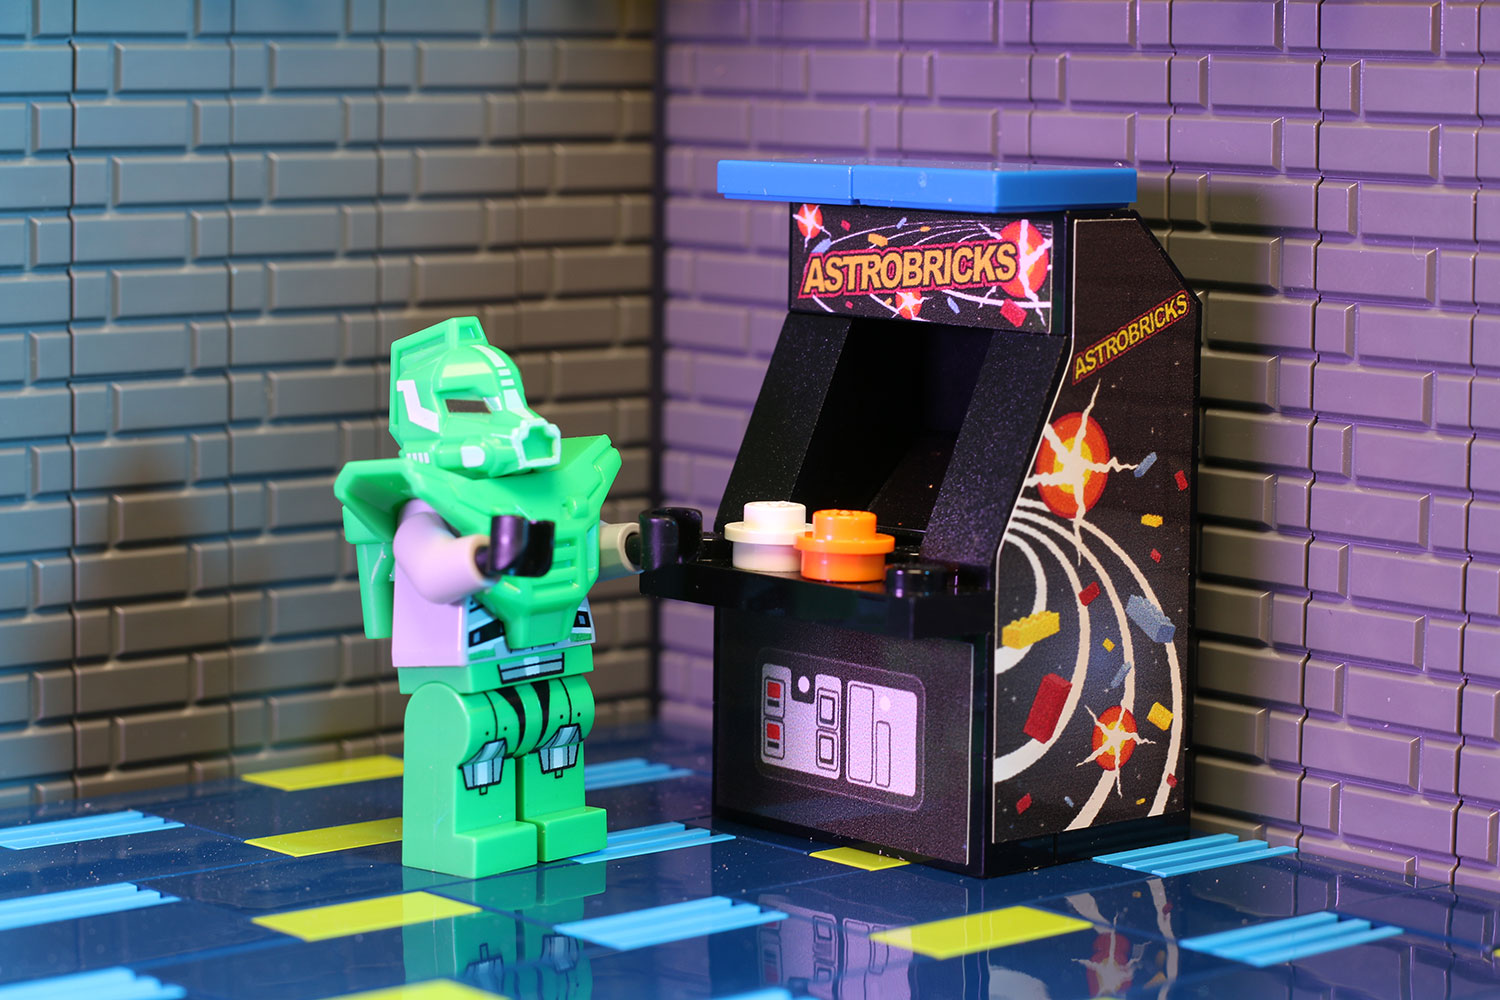 Custom Astrobricks Arcade Machine made using LEGO parts - B3 Customs